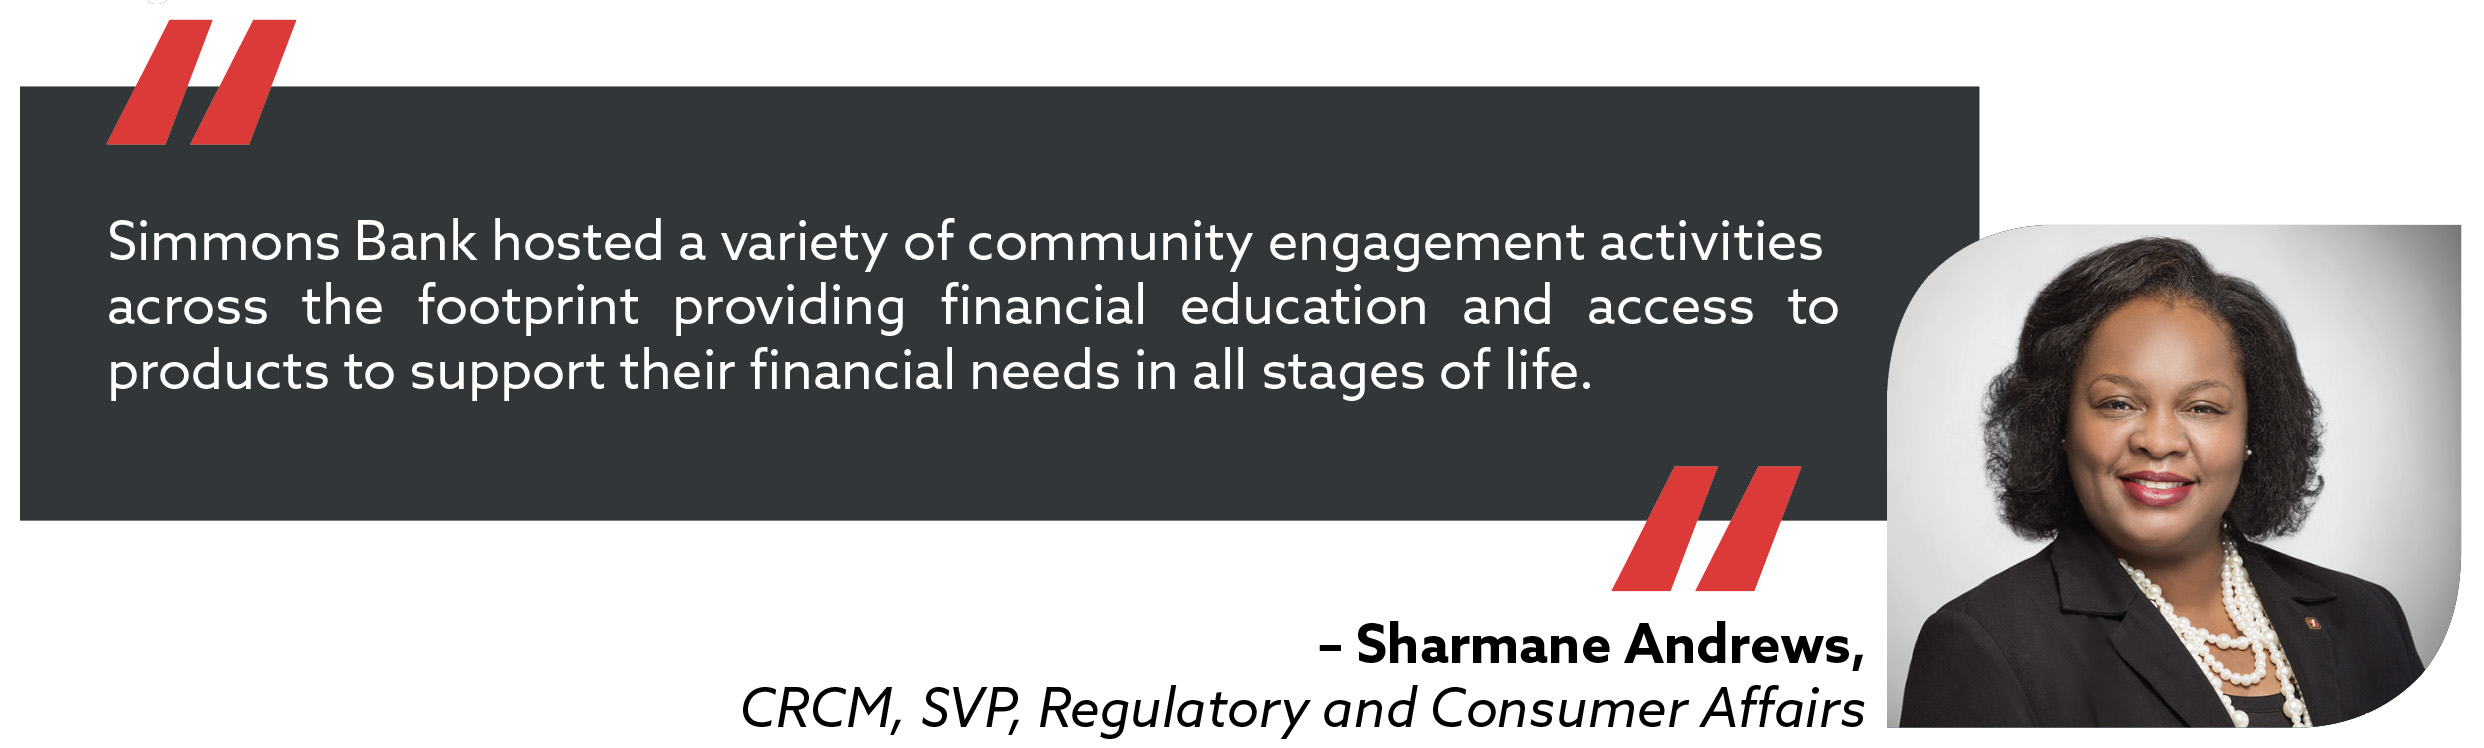 quote from Sharmane Andrews CRCM, SVP Regulatory and Consumer Affairs